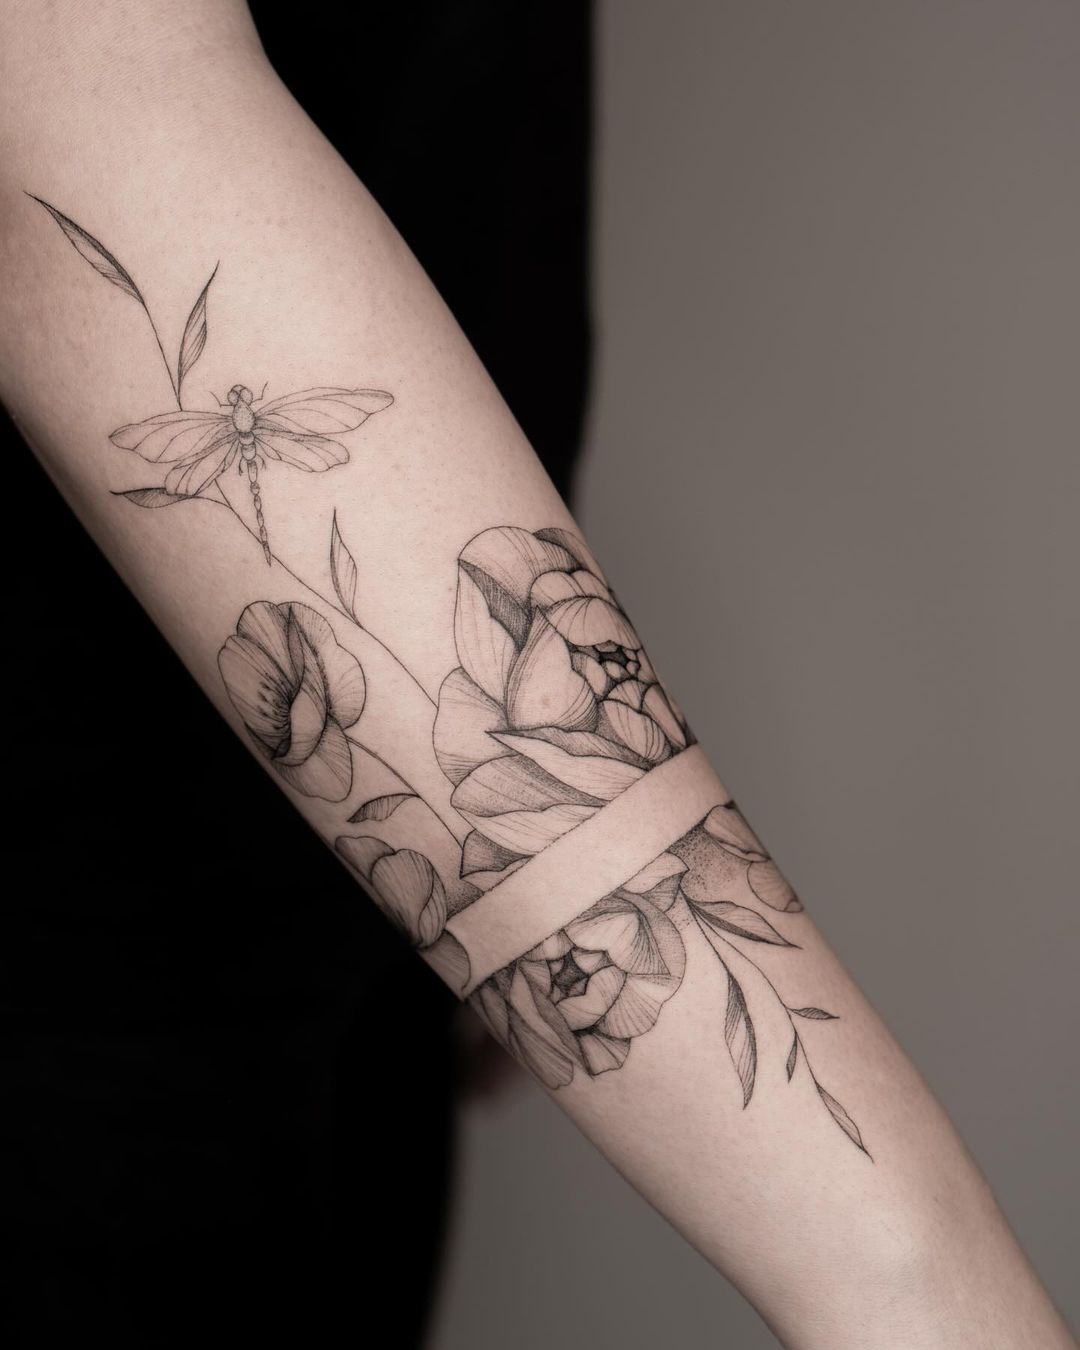 Armband forest tattoo design by merletattoo